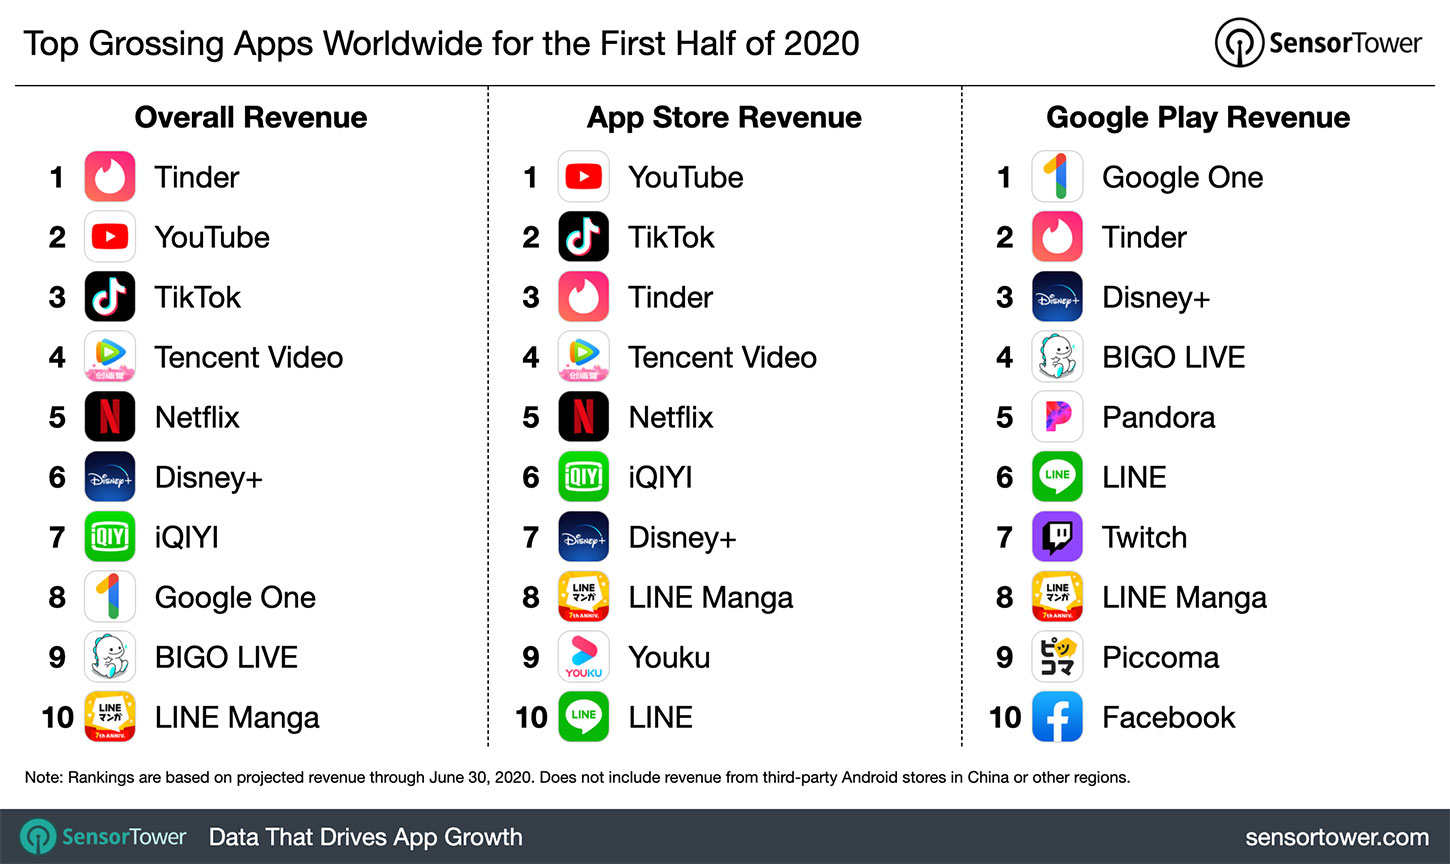 1H 2020 Top Grossing Apps Worldwide